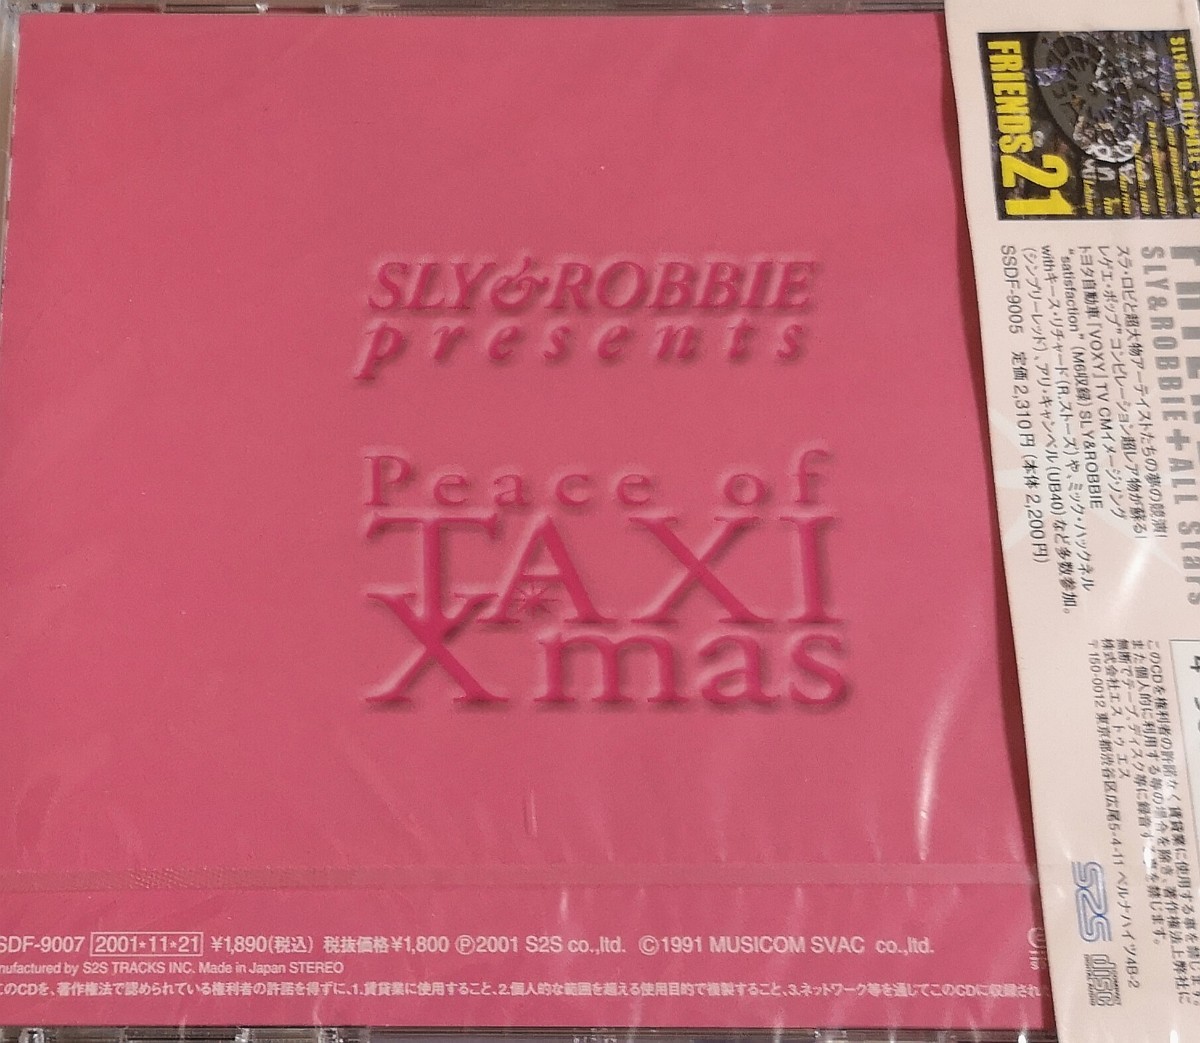 【SLY&ROBBIE presents PEACE OF TAXI X'MAS】 未開封CD/SEALED_画像2